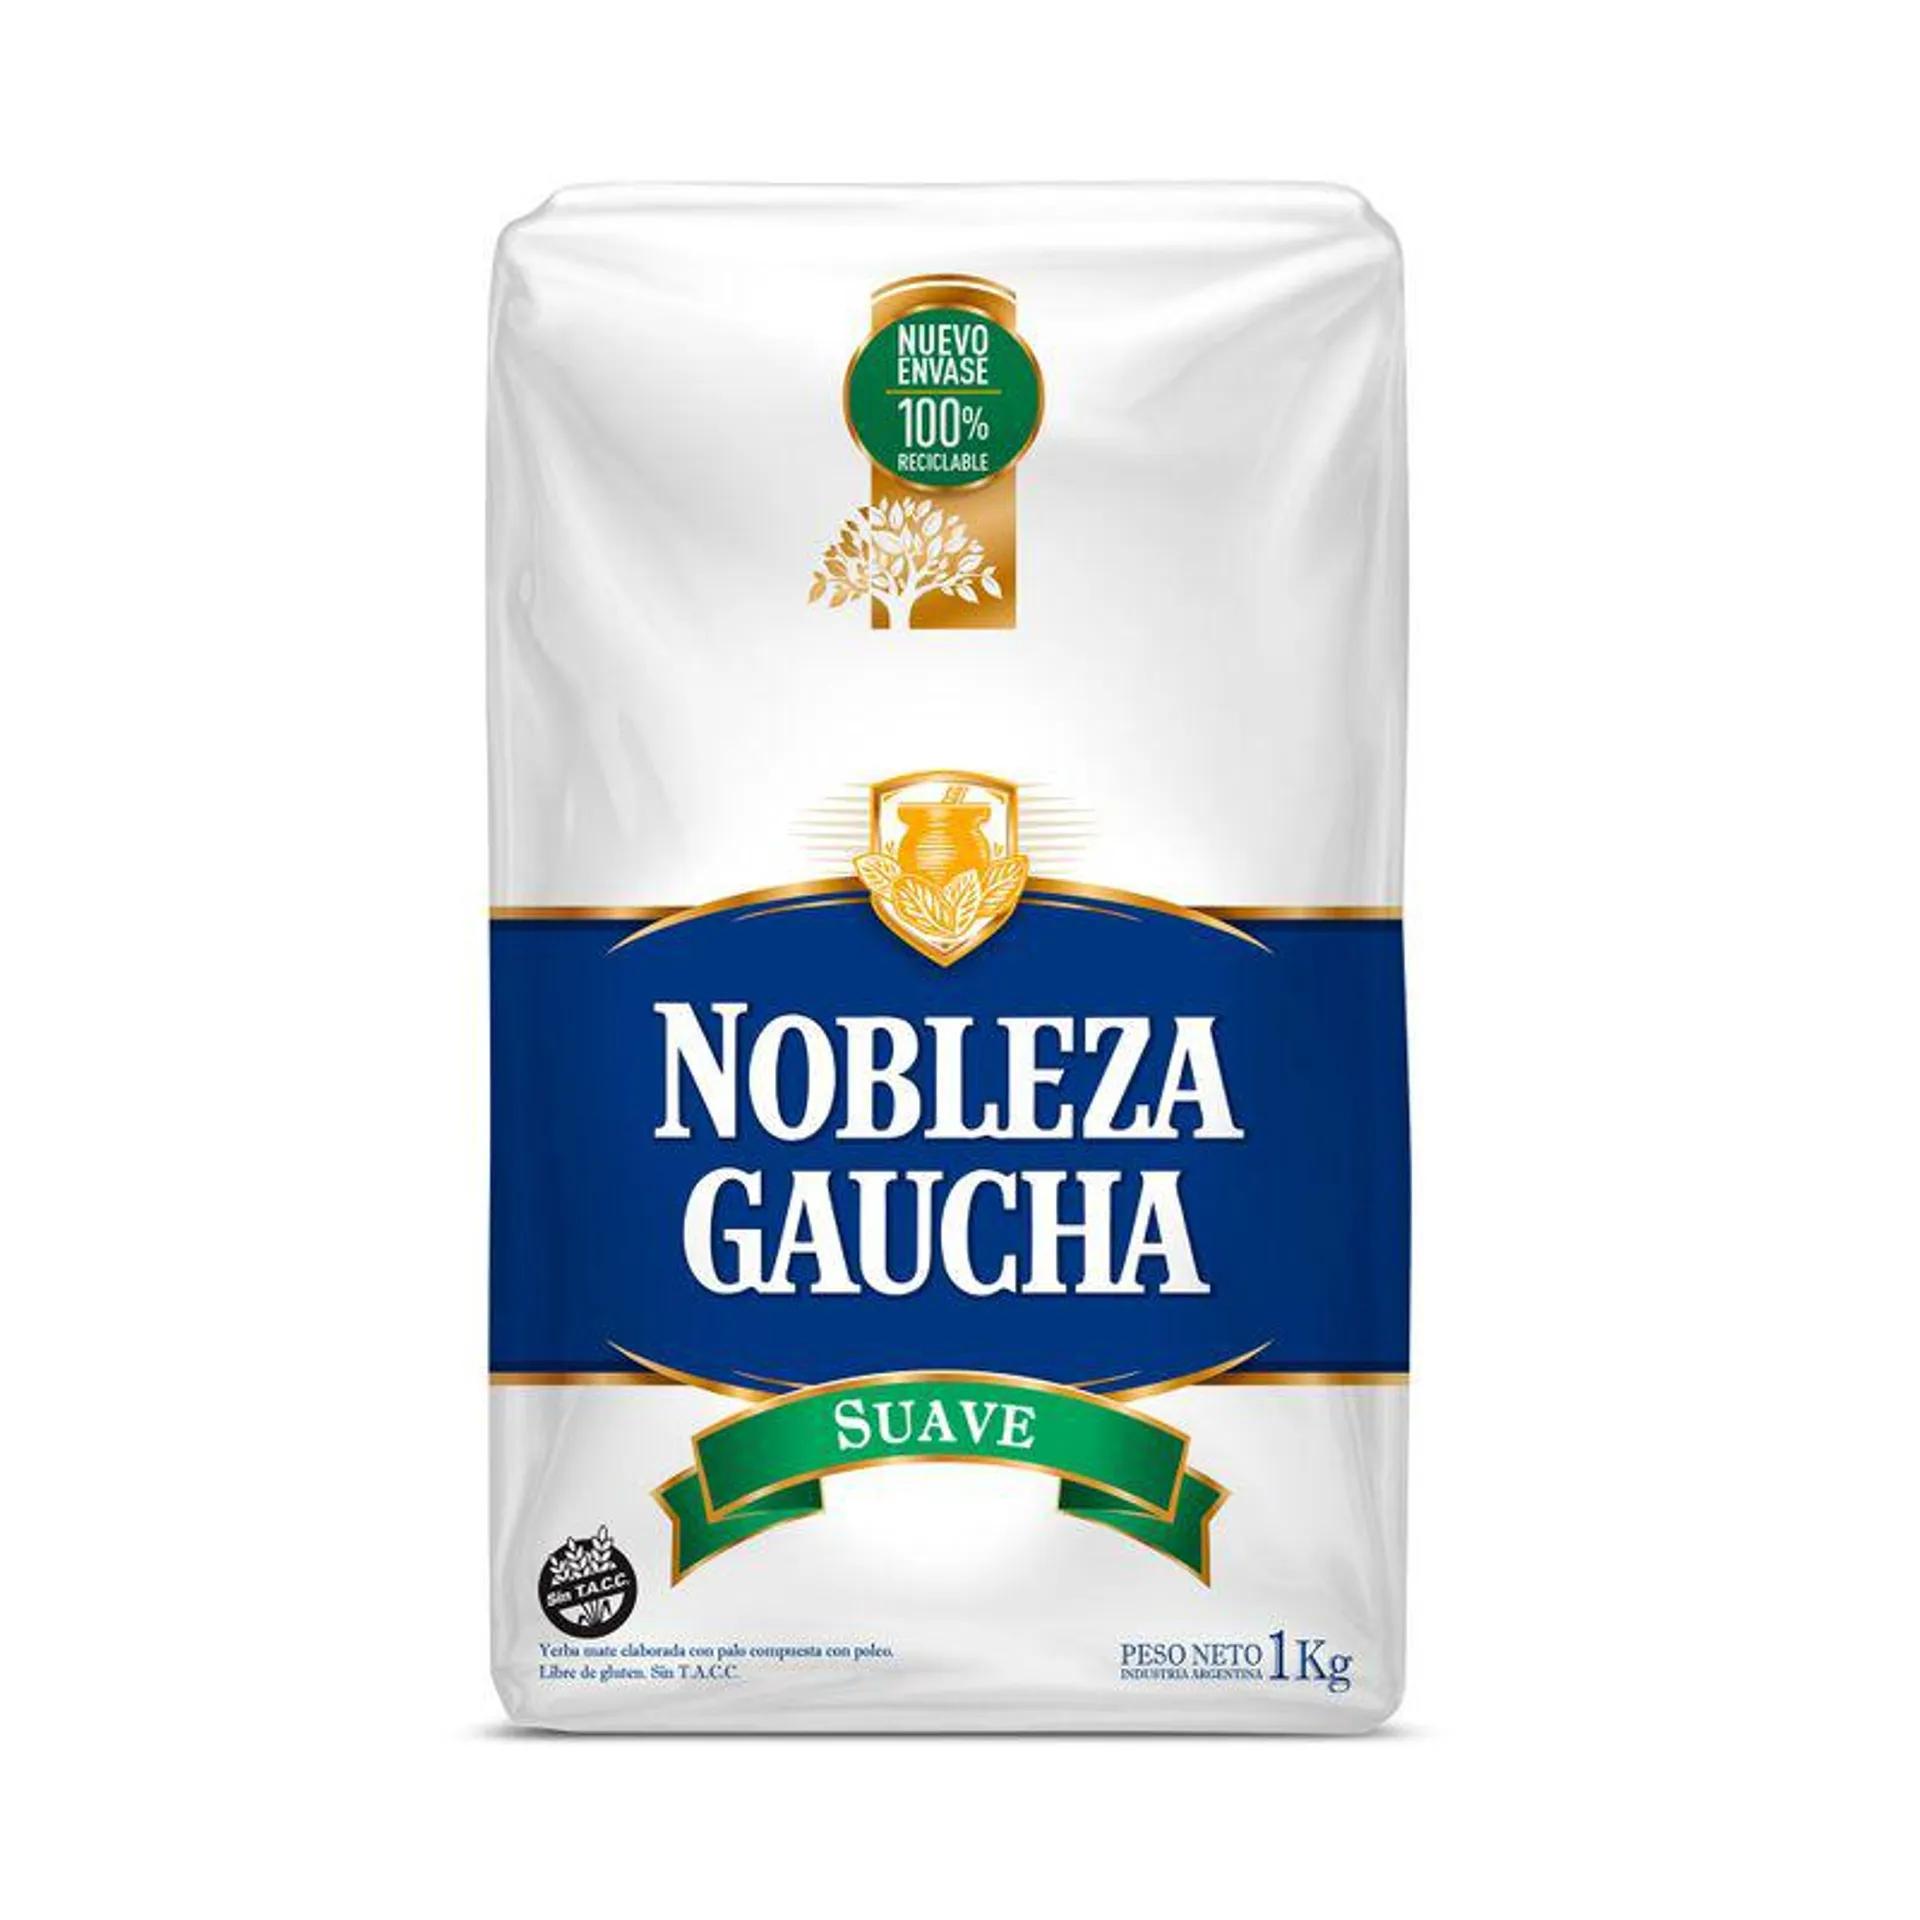 Yerba mate Nobleza Gaucha suave 1 kg.